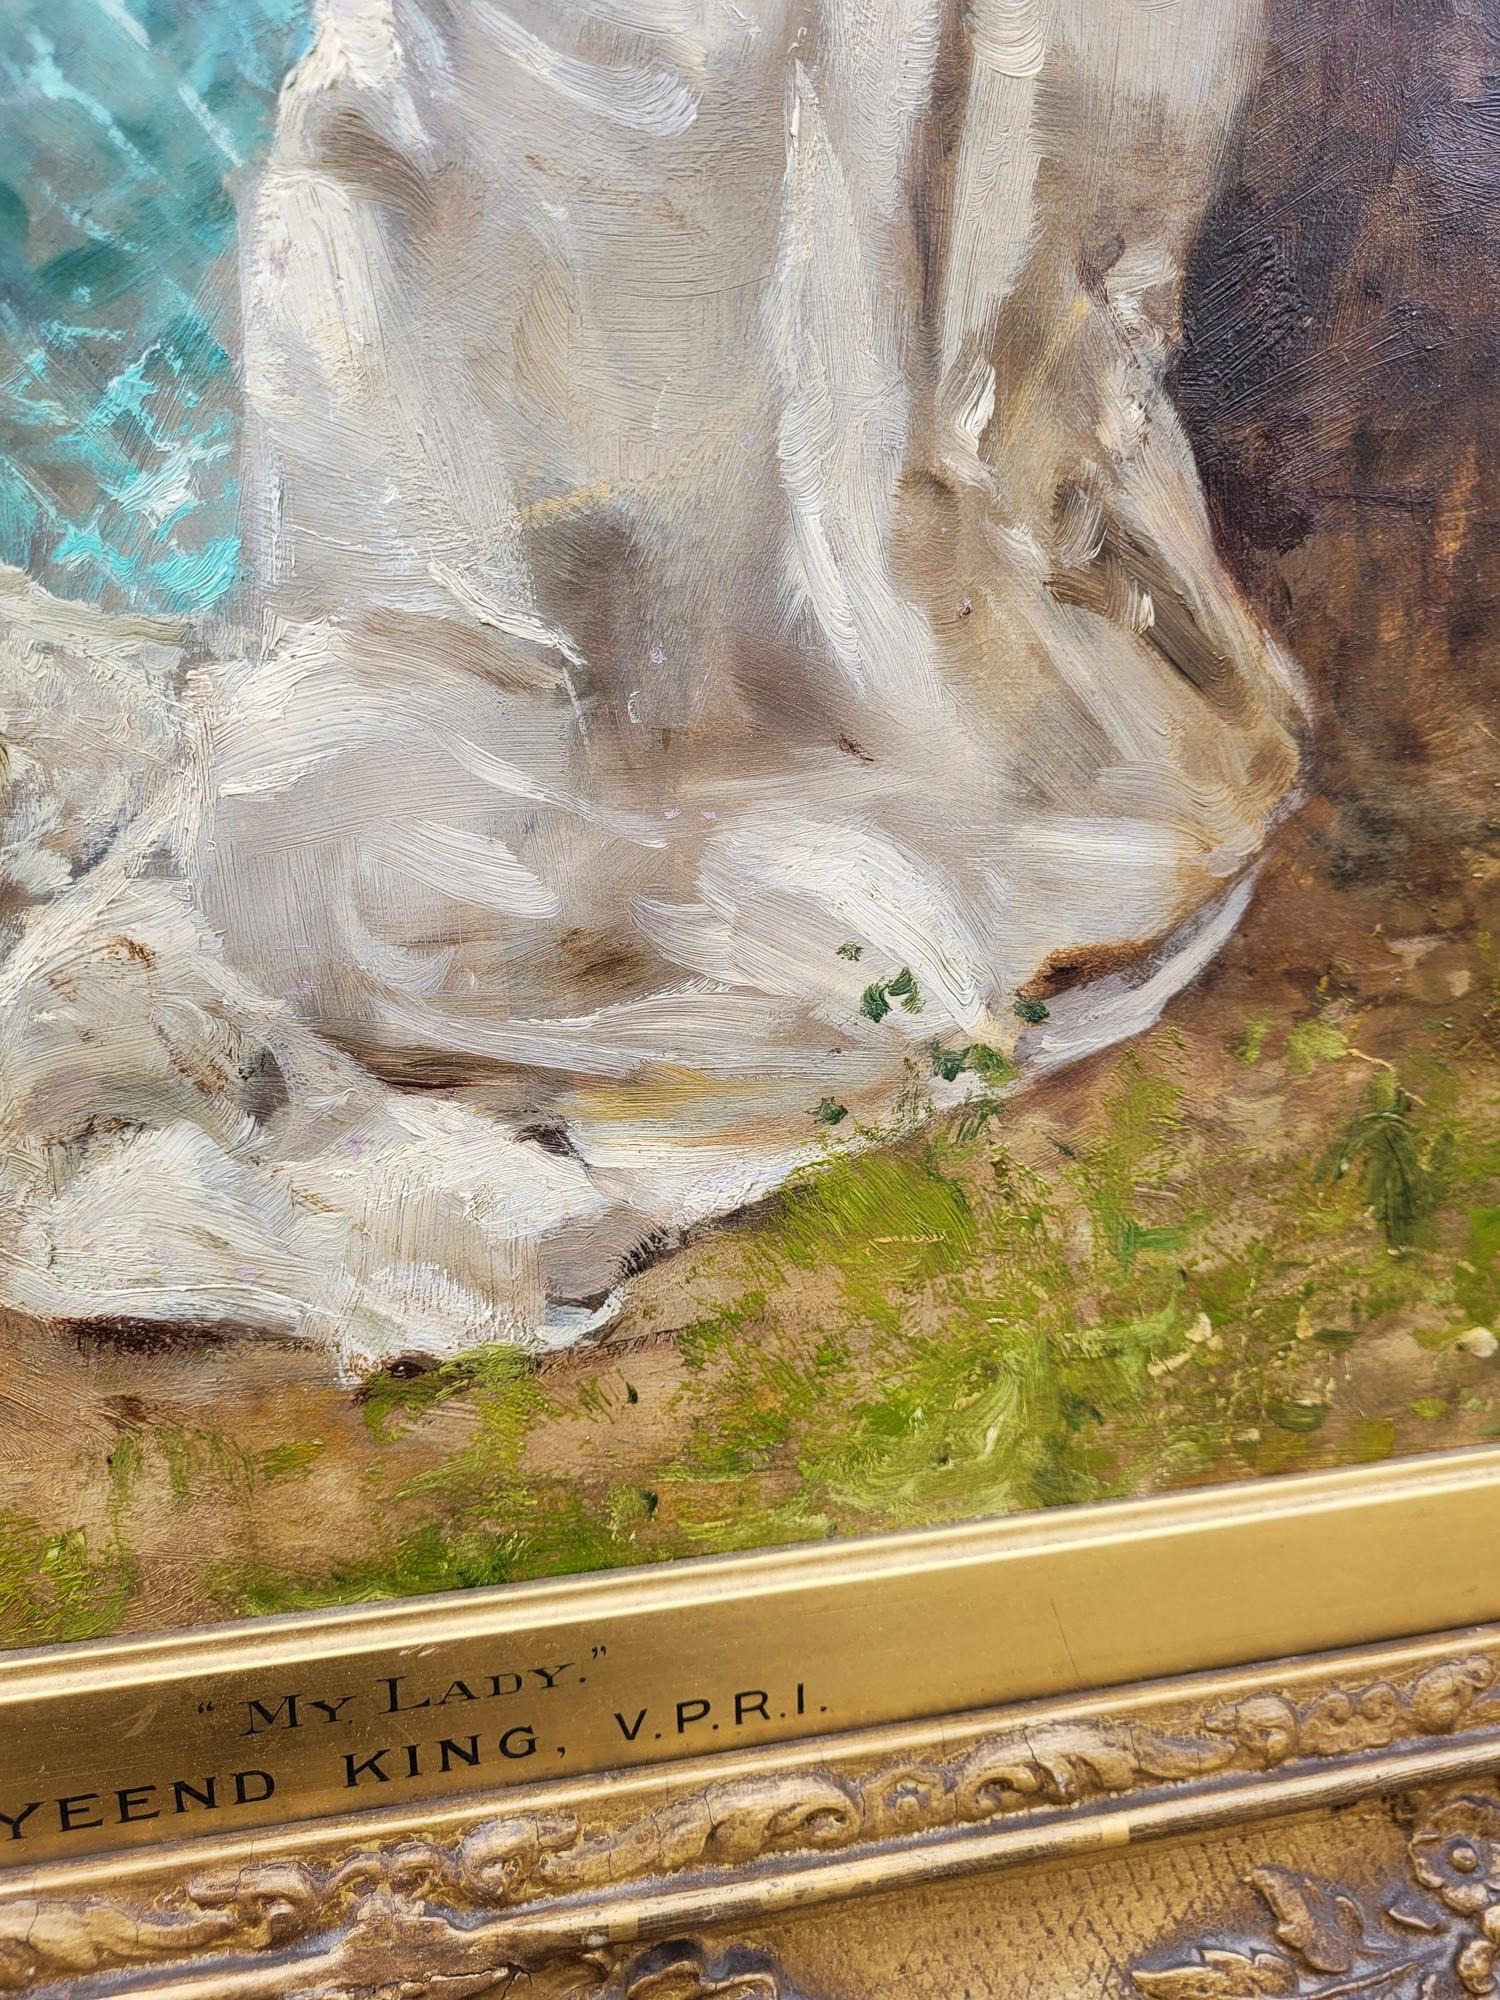 Yeend King, My Lady, huile sur toile encadrée, XIXe siècle en vente 6